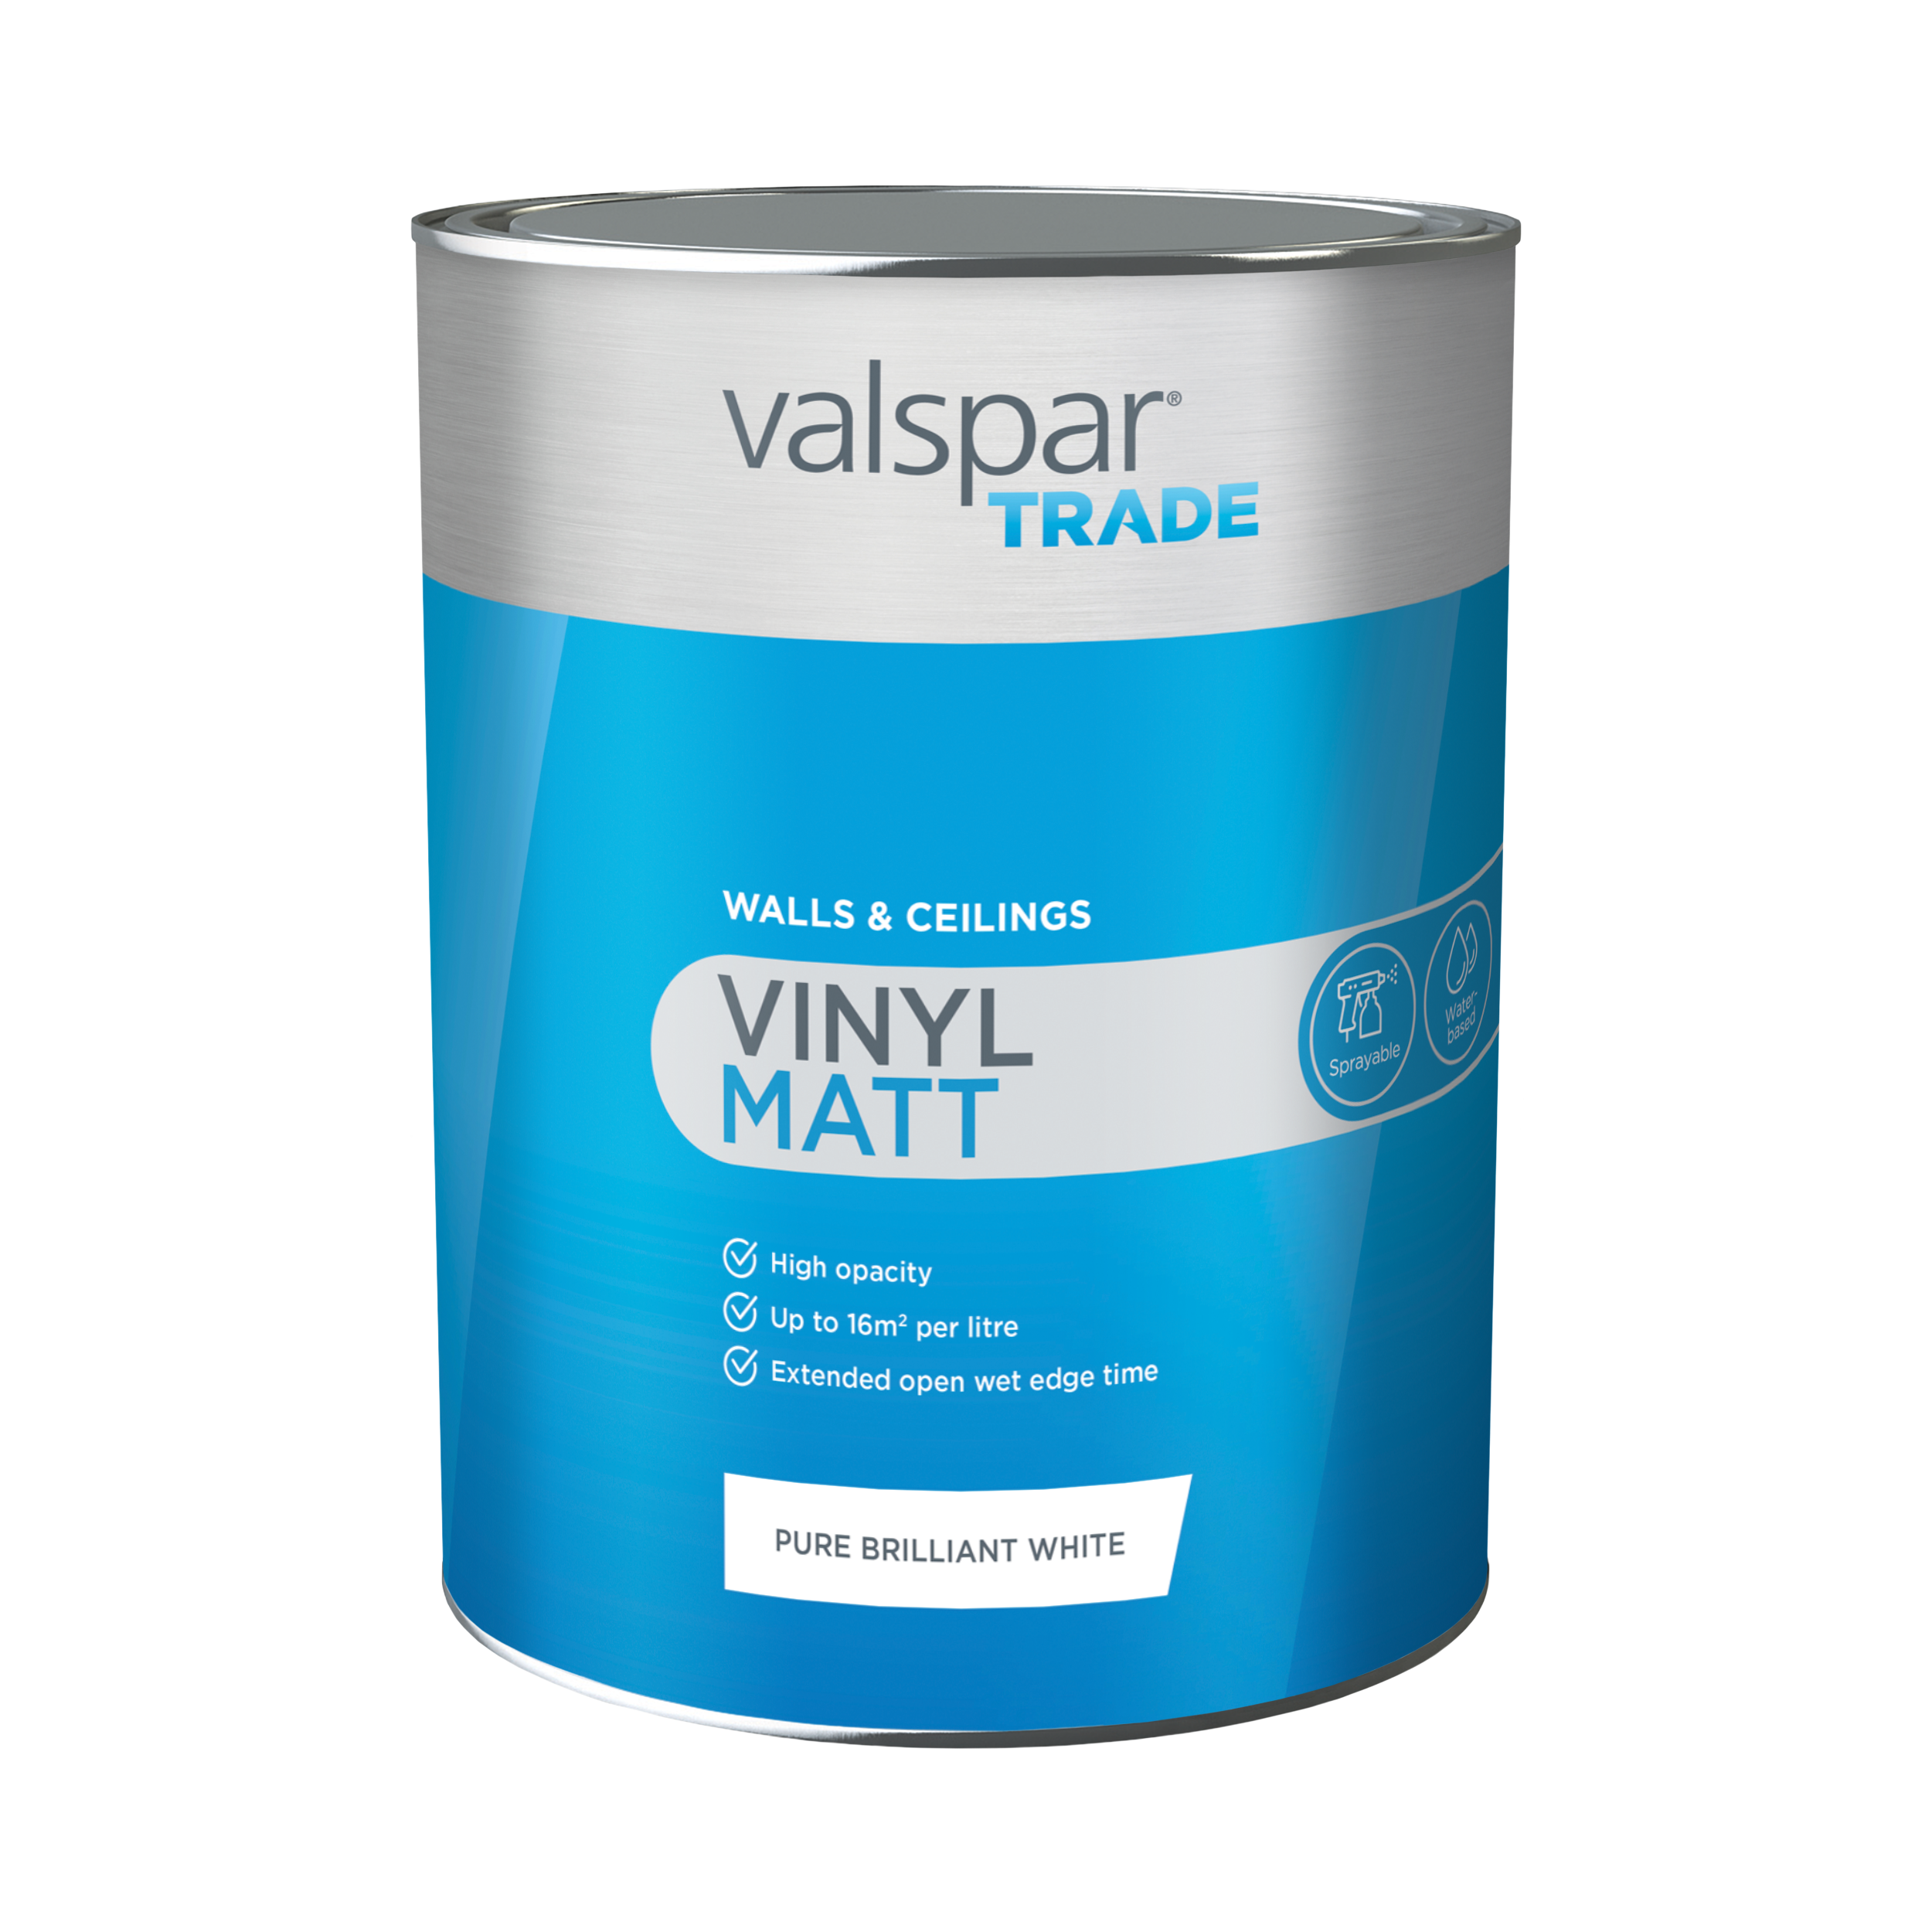 Valspar® Trade Walls & Ceilings Pure Brilliant White Vinyl Matt